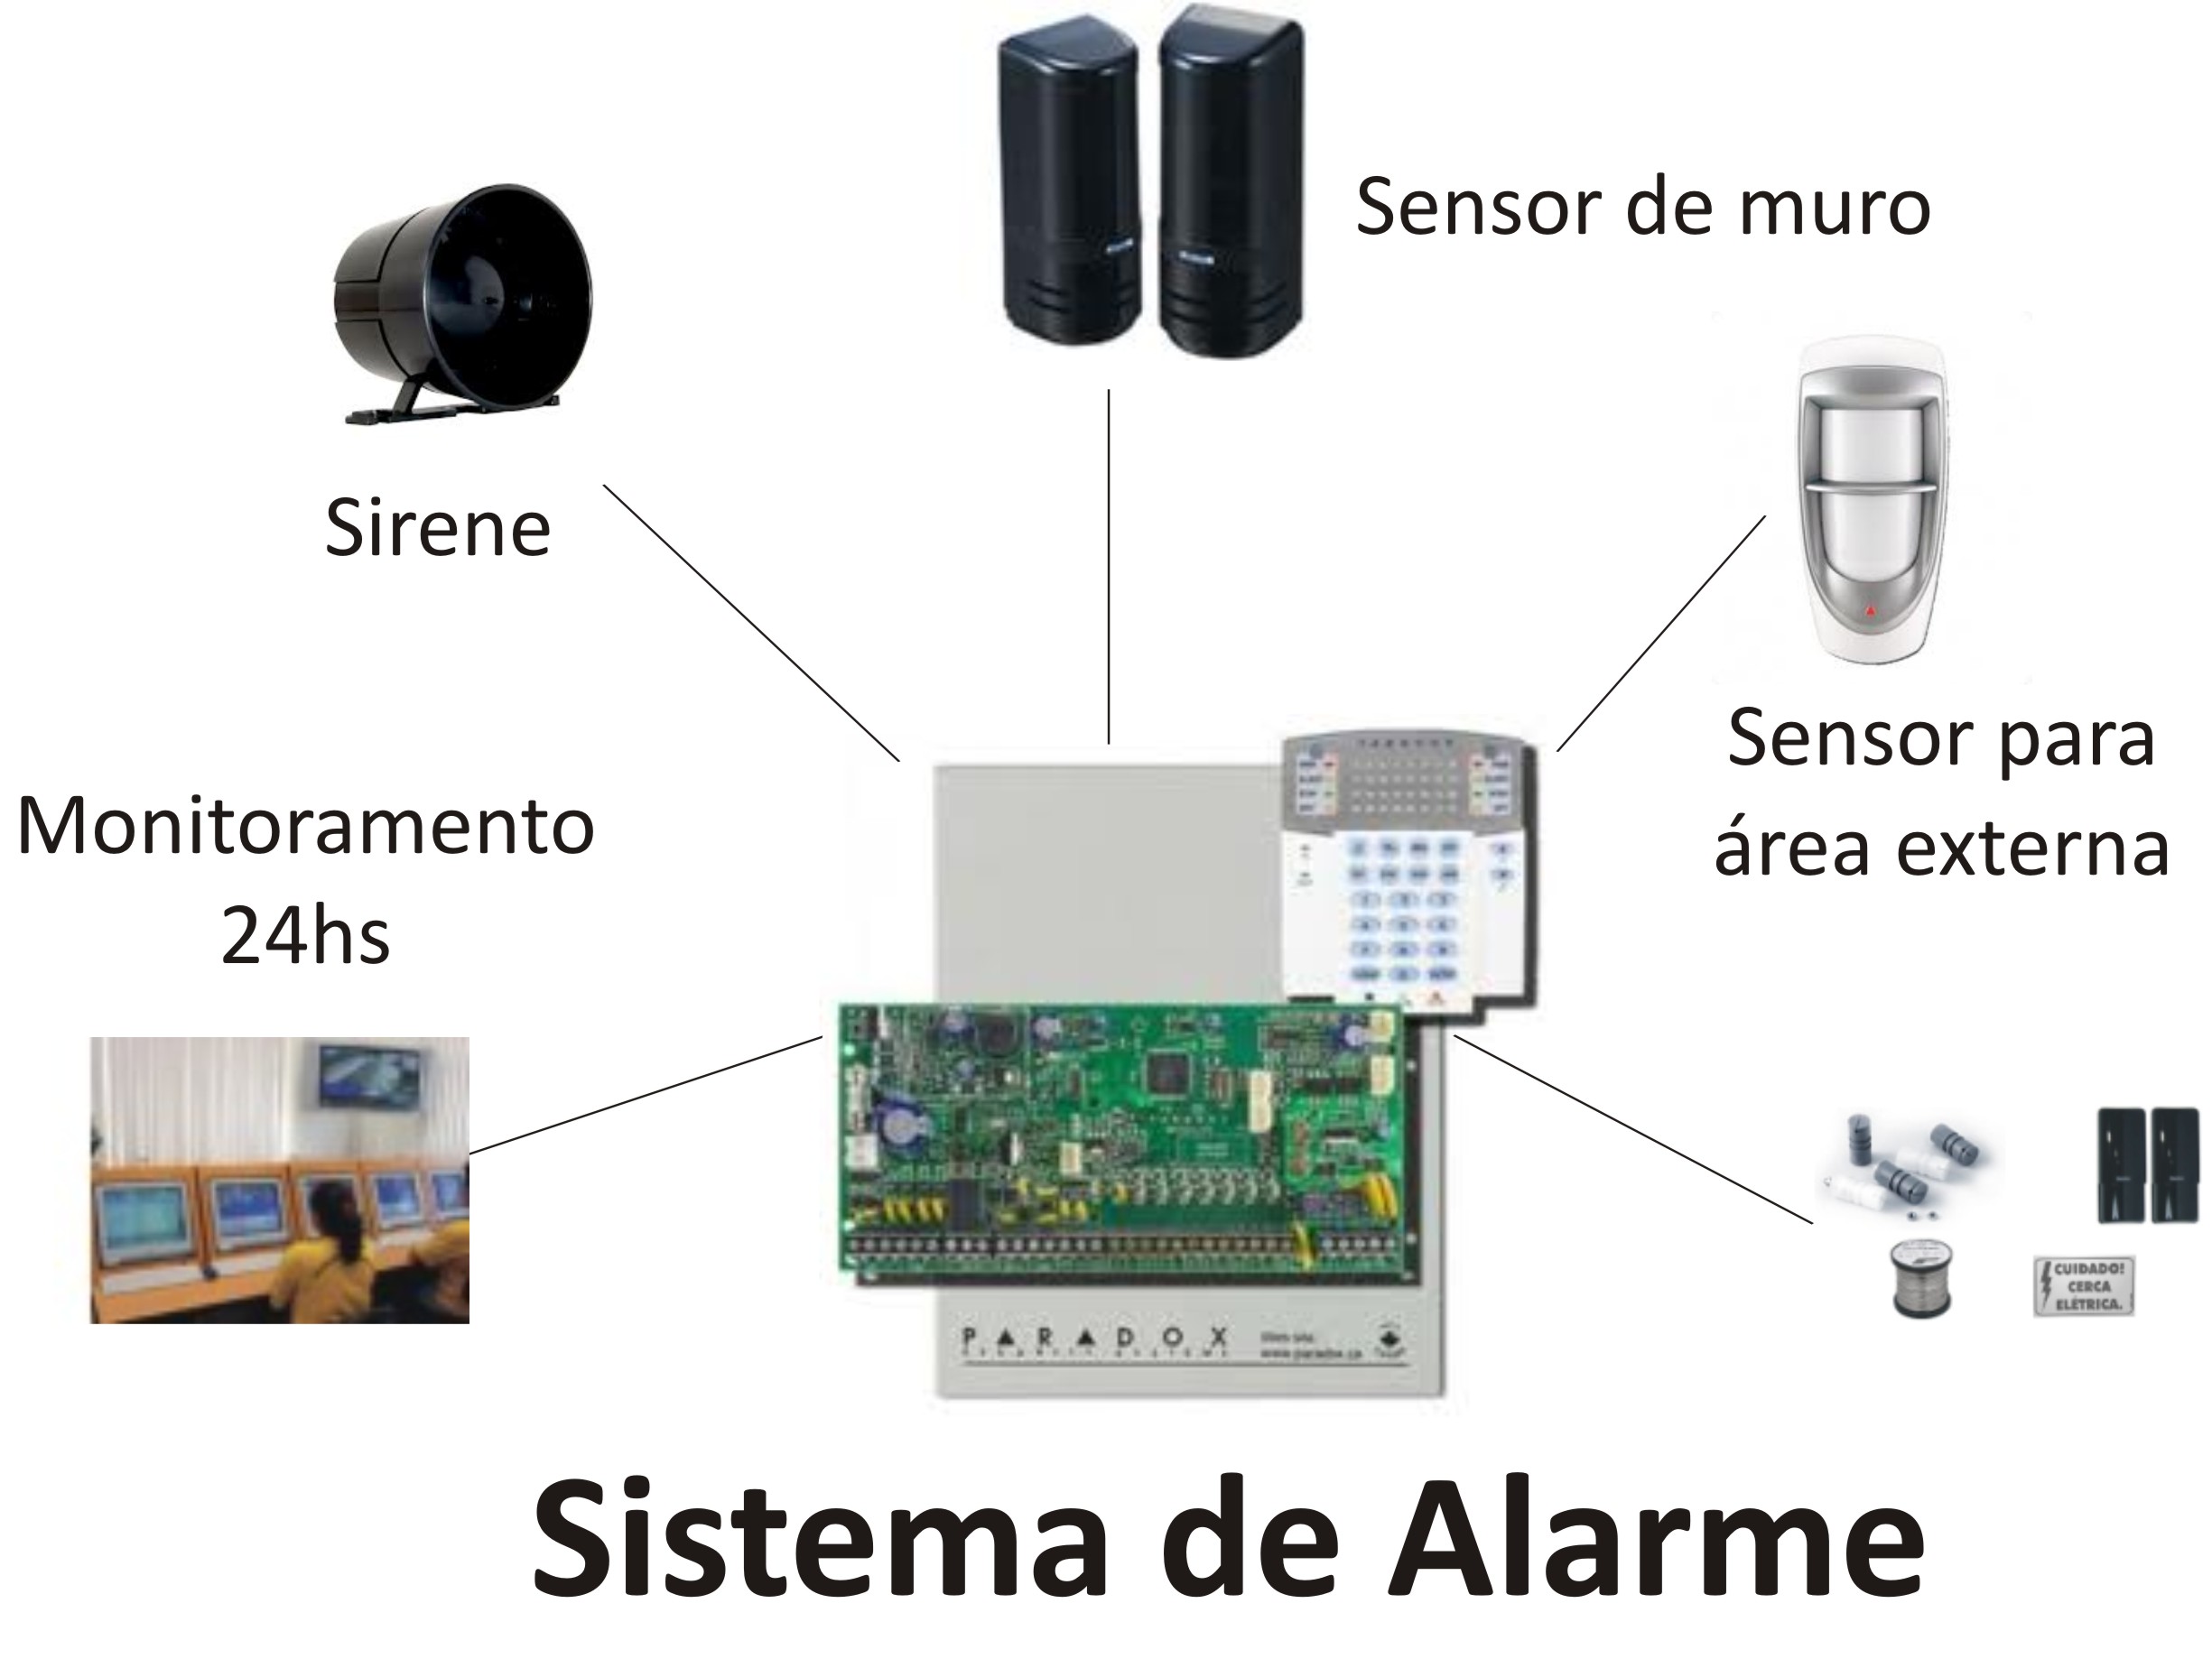 Central de alarme conectada a sensores, cerca elétrica e monitoramento